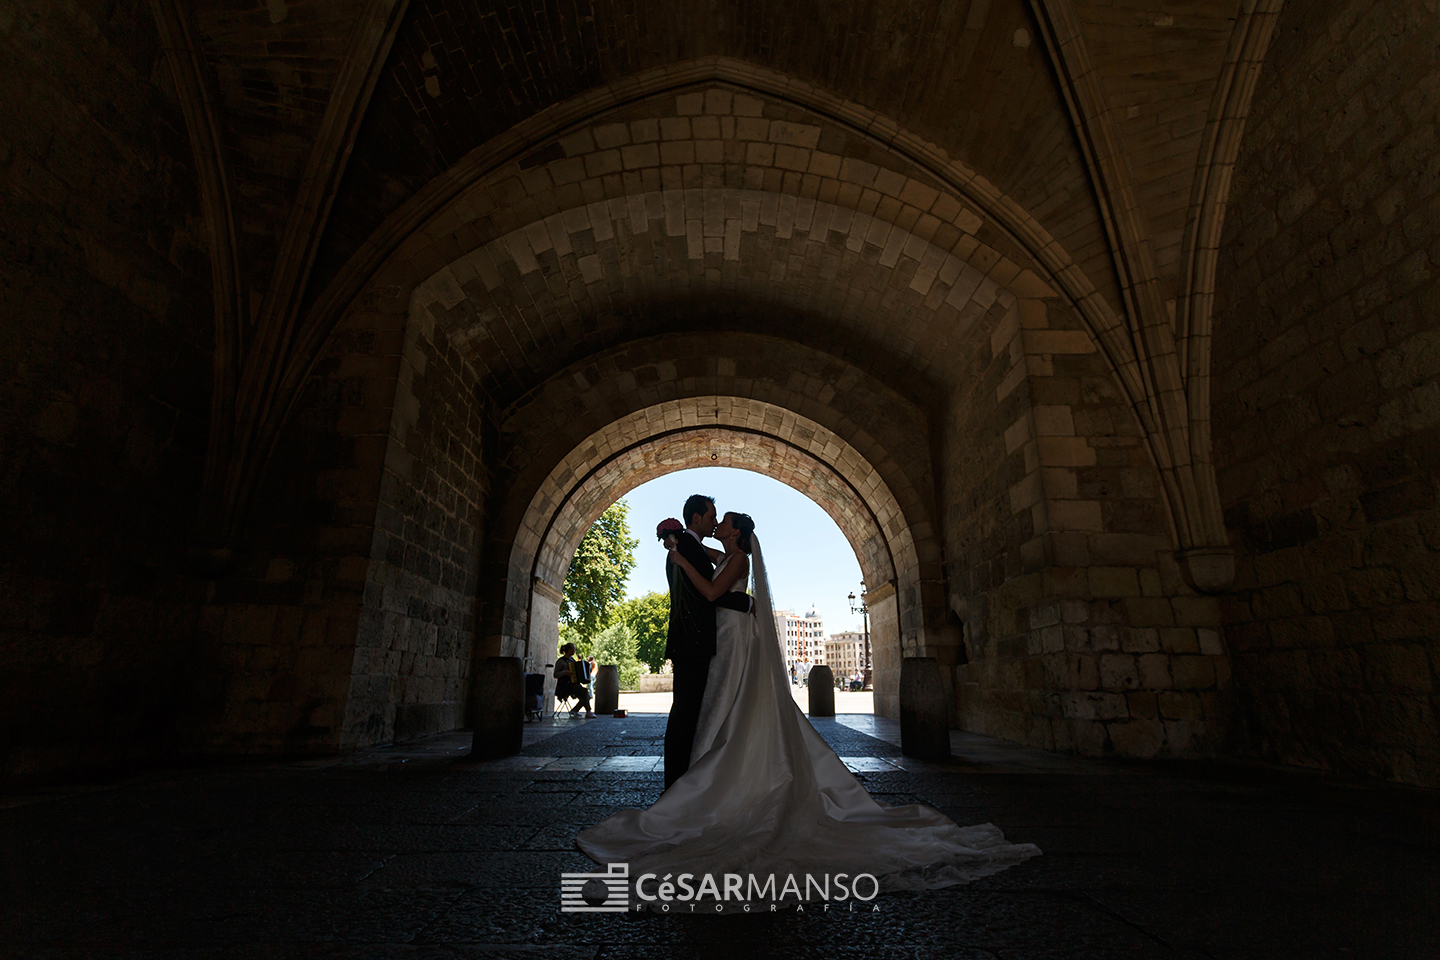 César Manso Fotógrafo: Fotógrafos de boda en Burgos - Boda%20AlejandrayJairo-20.JPG